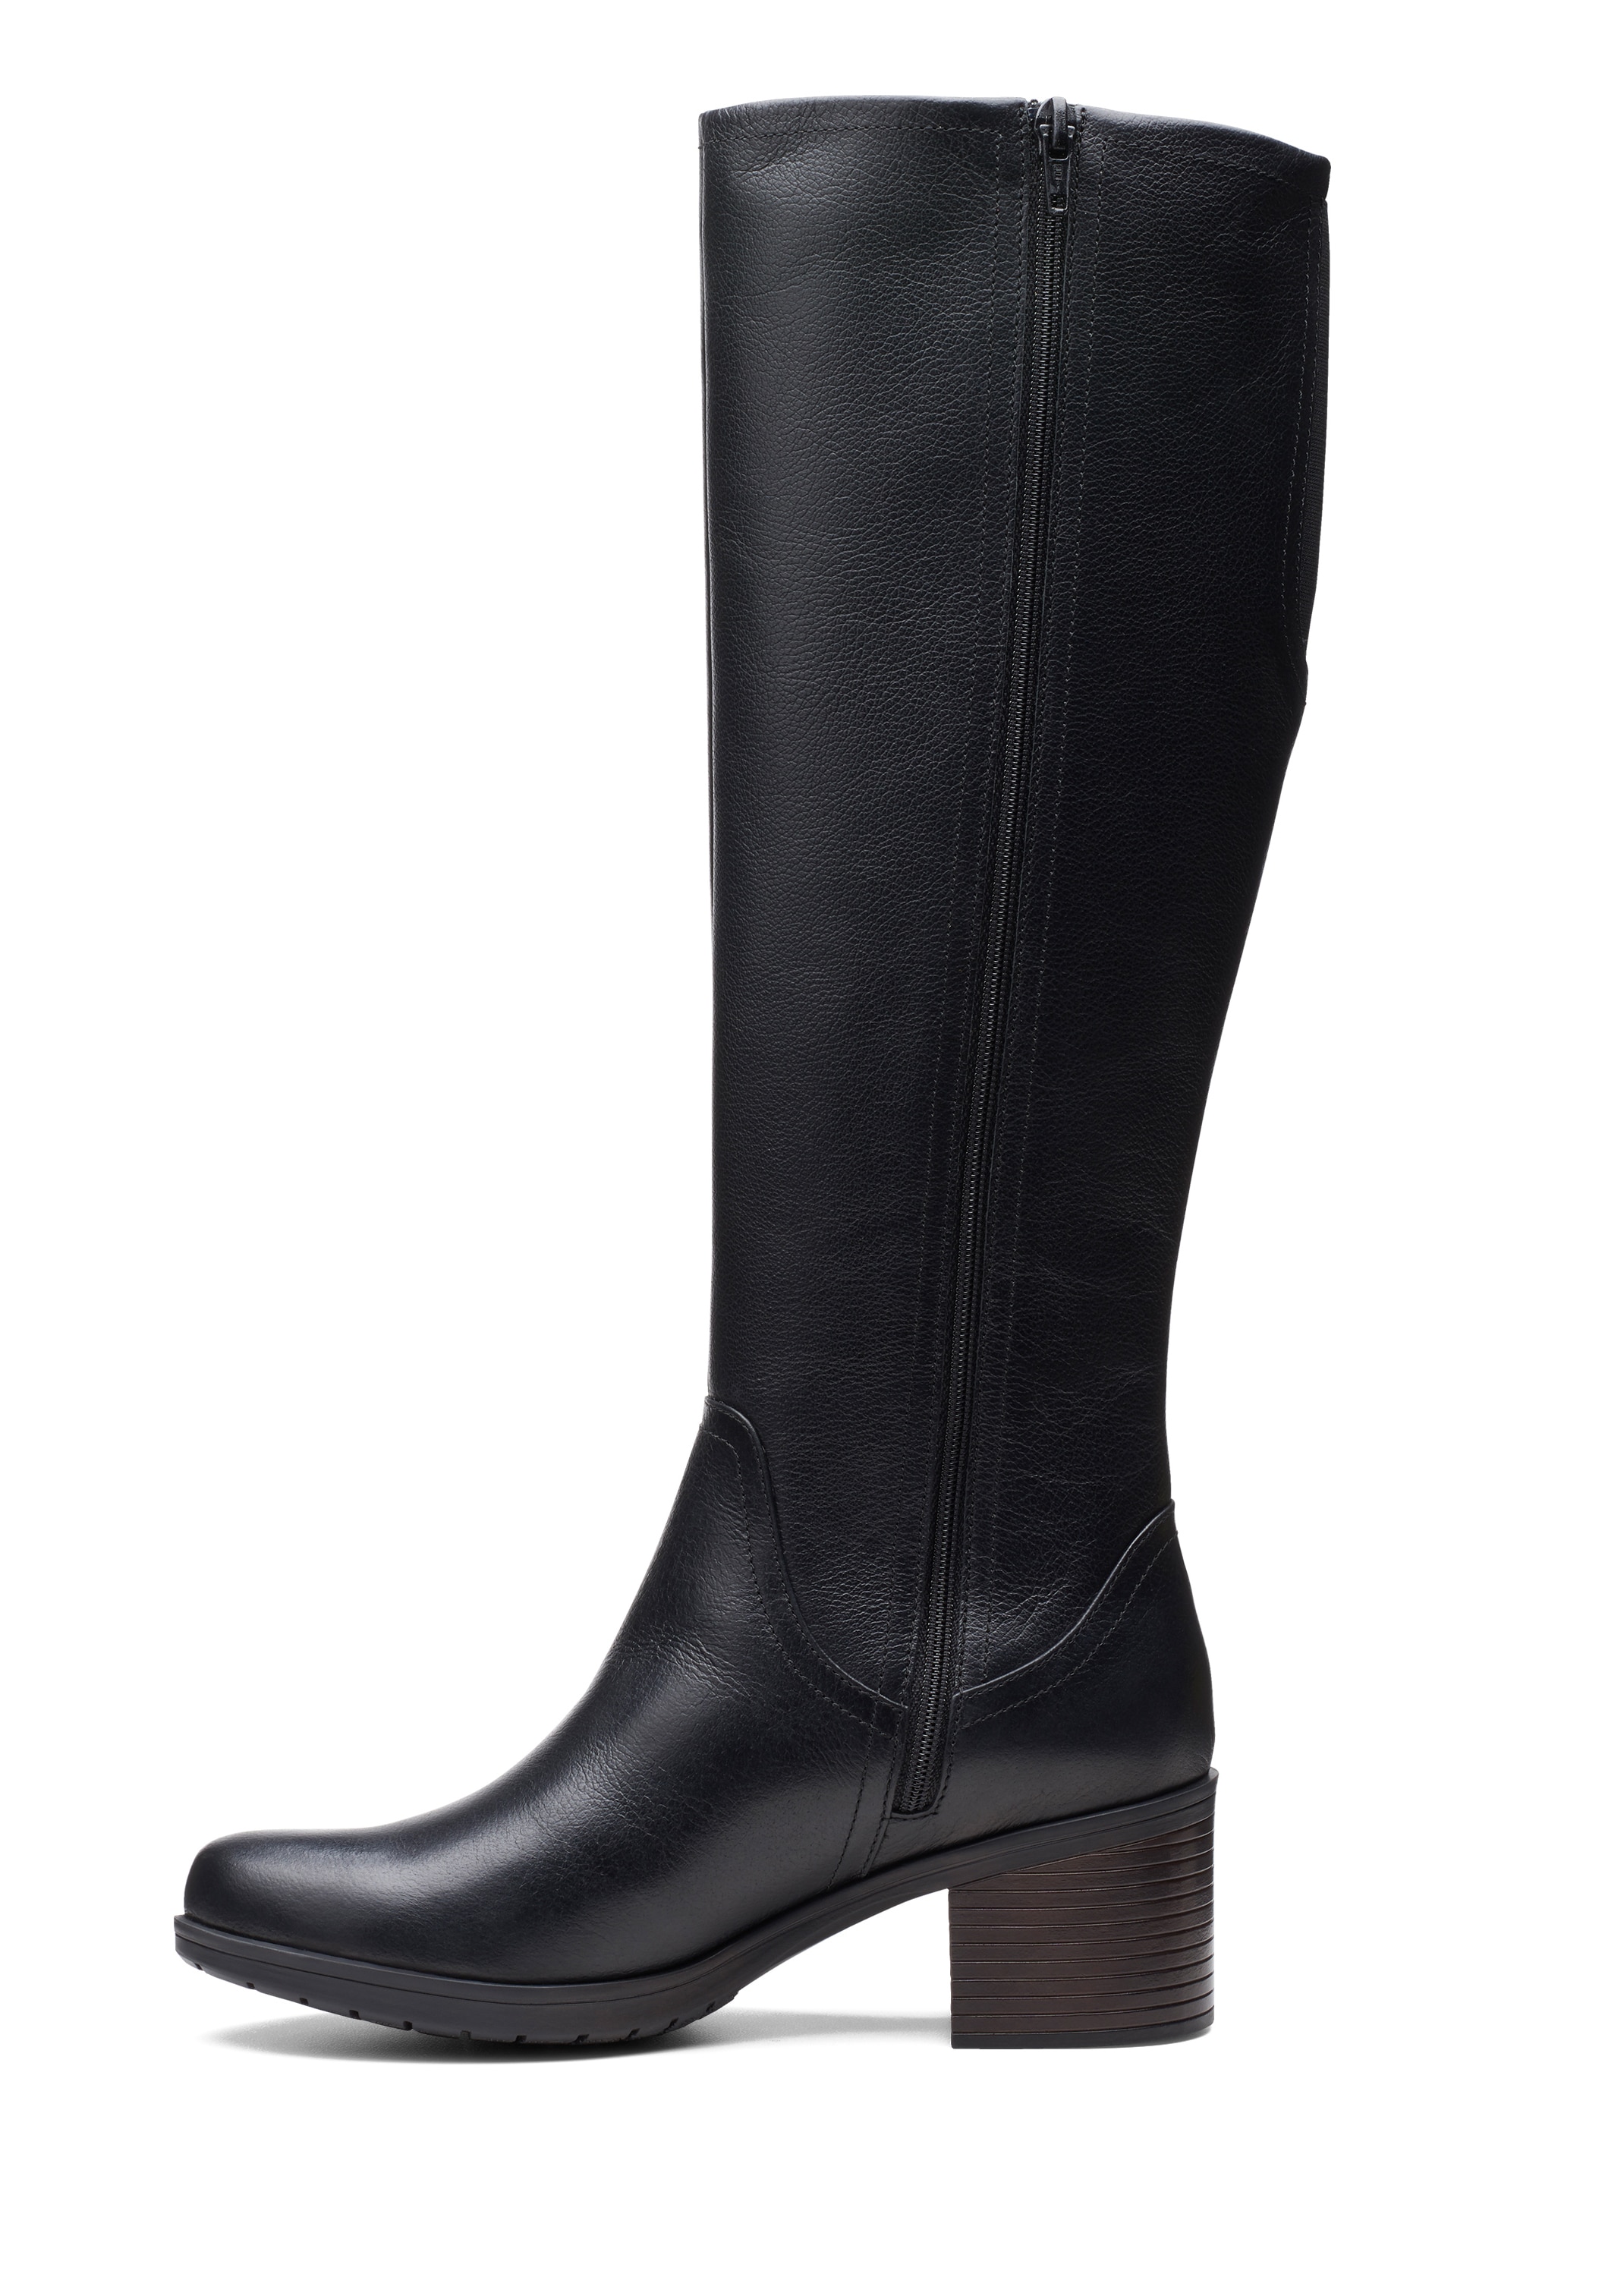 clarks womens tall boots